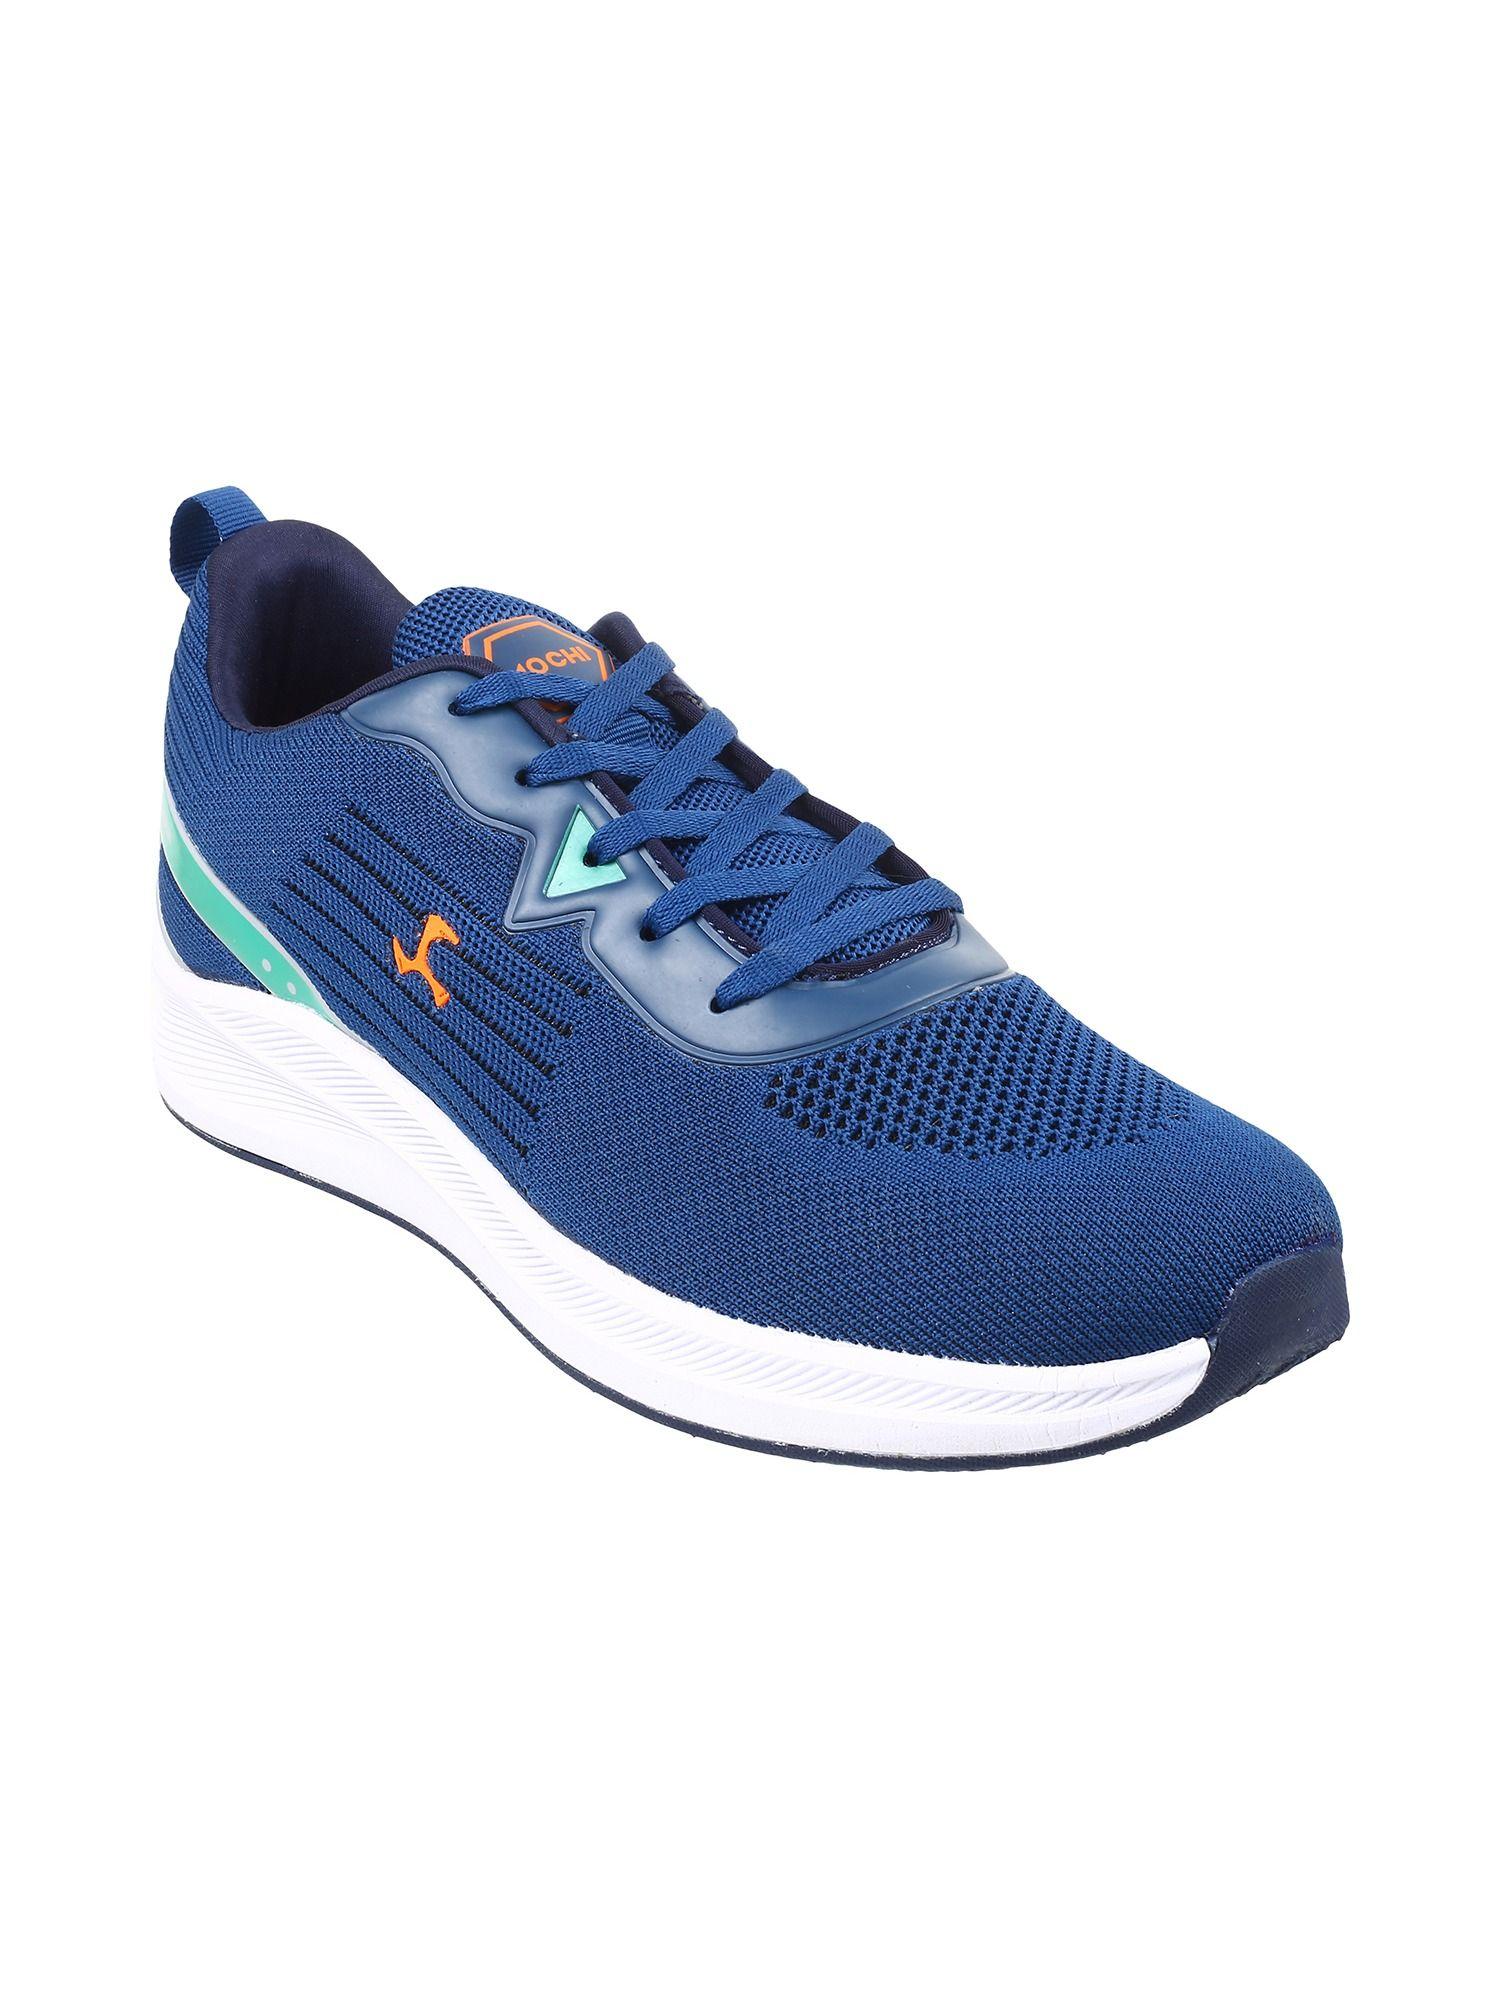 mens-light-blue-sports-lace-ups-shoesmochi-light-blue-woven-walking-shoes